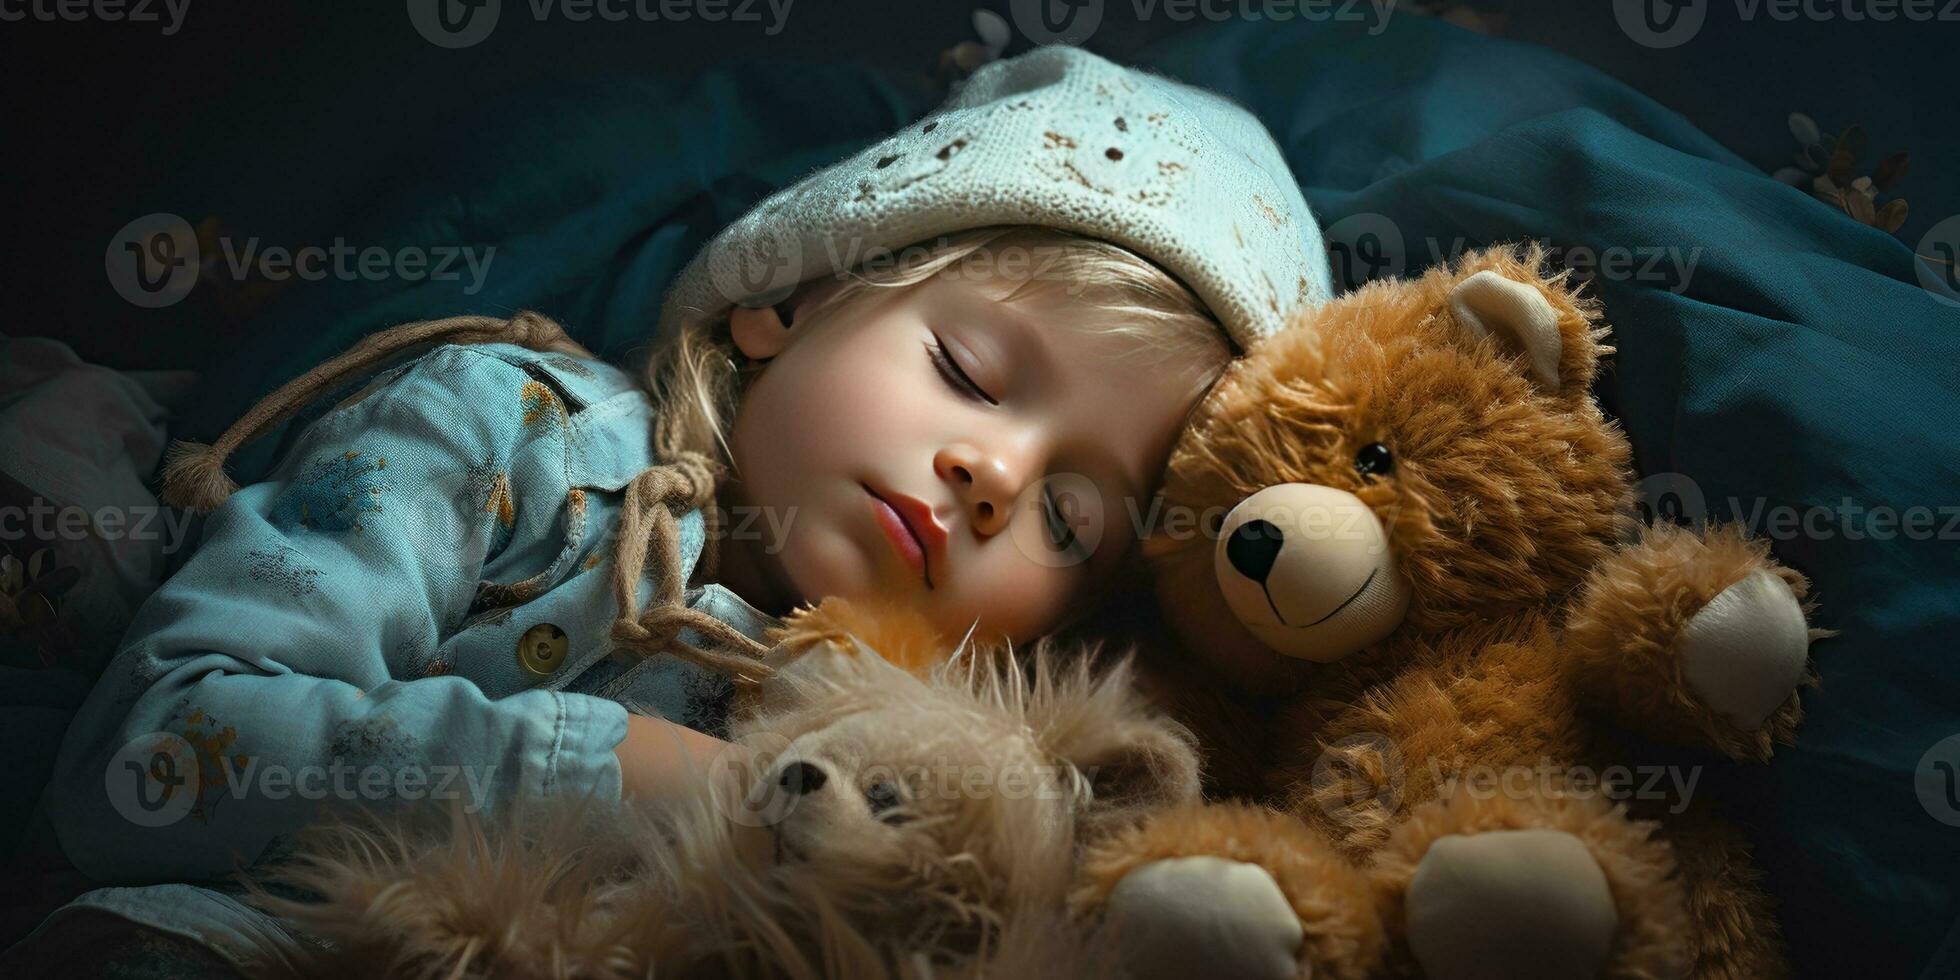 A small child hugs a teddy bear in a dream. Generative AI photo